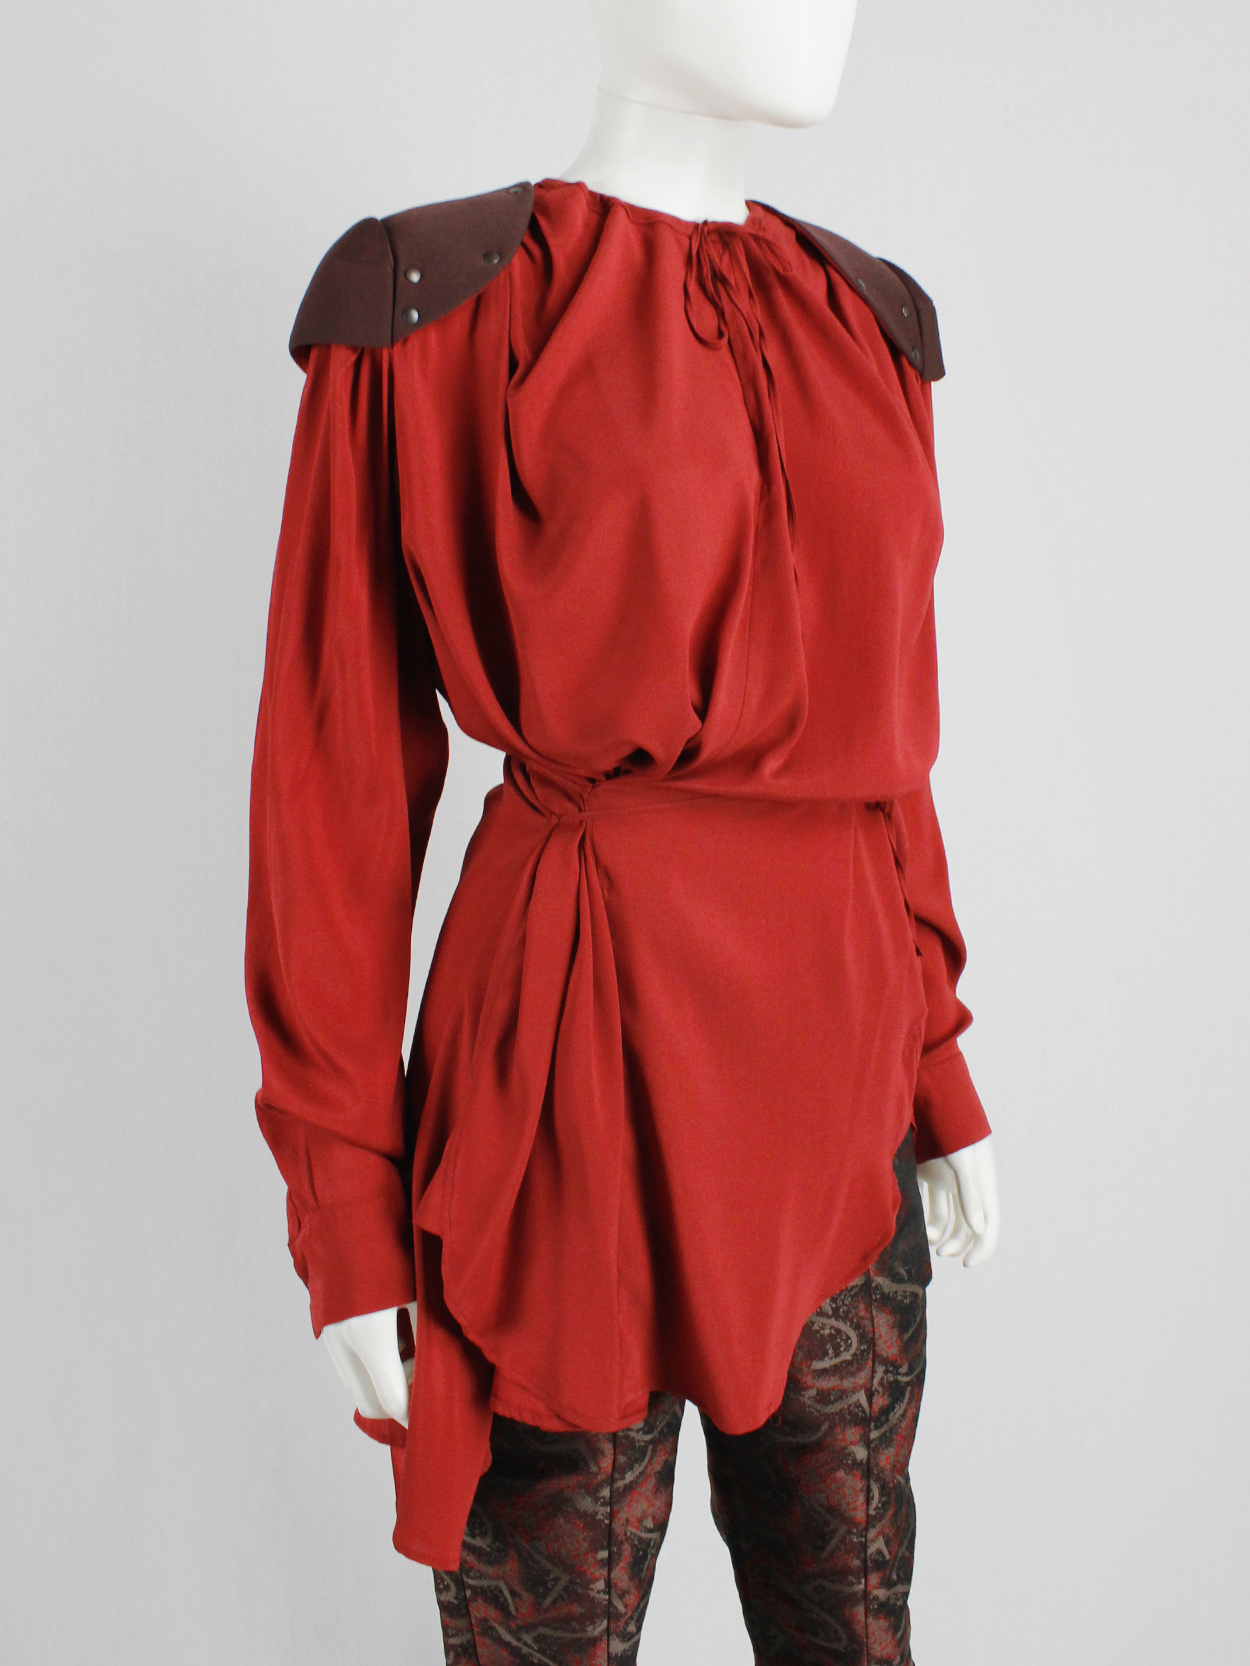 Vandevorst red blouse with brown riveted shoulder pads runway fall 2010 (10)